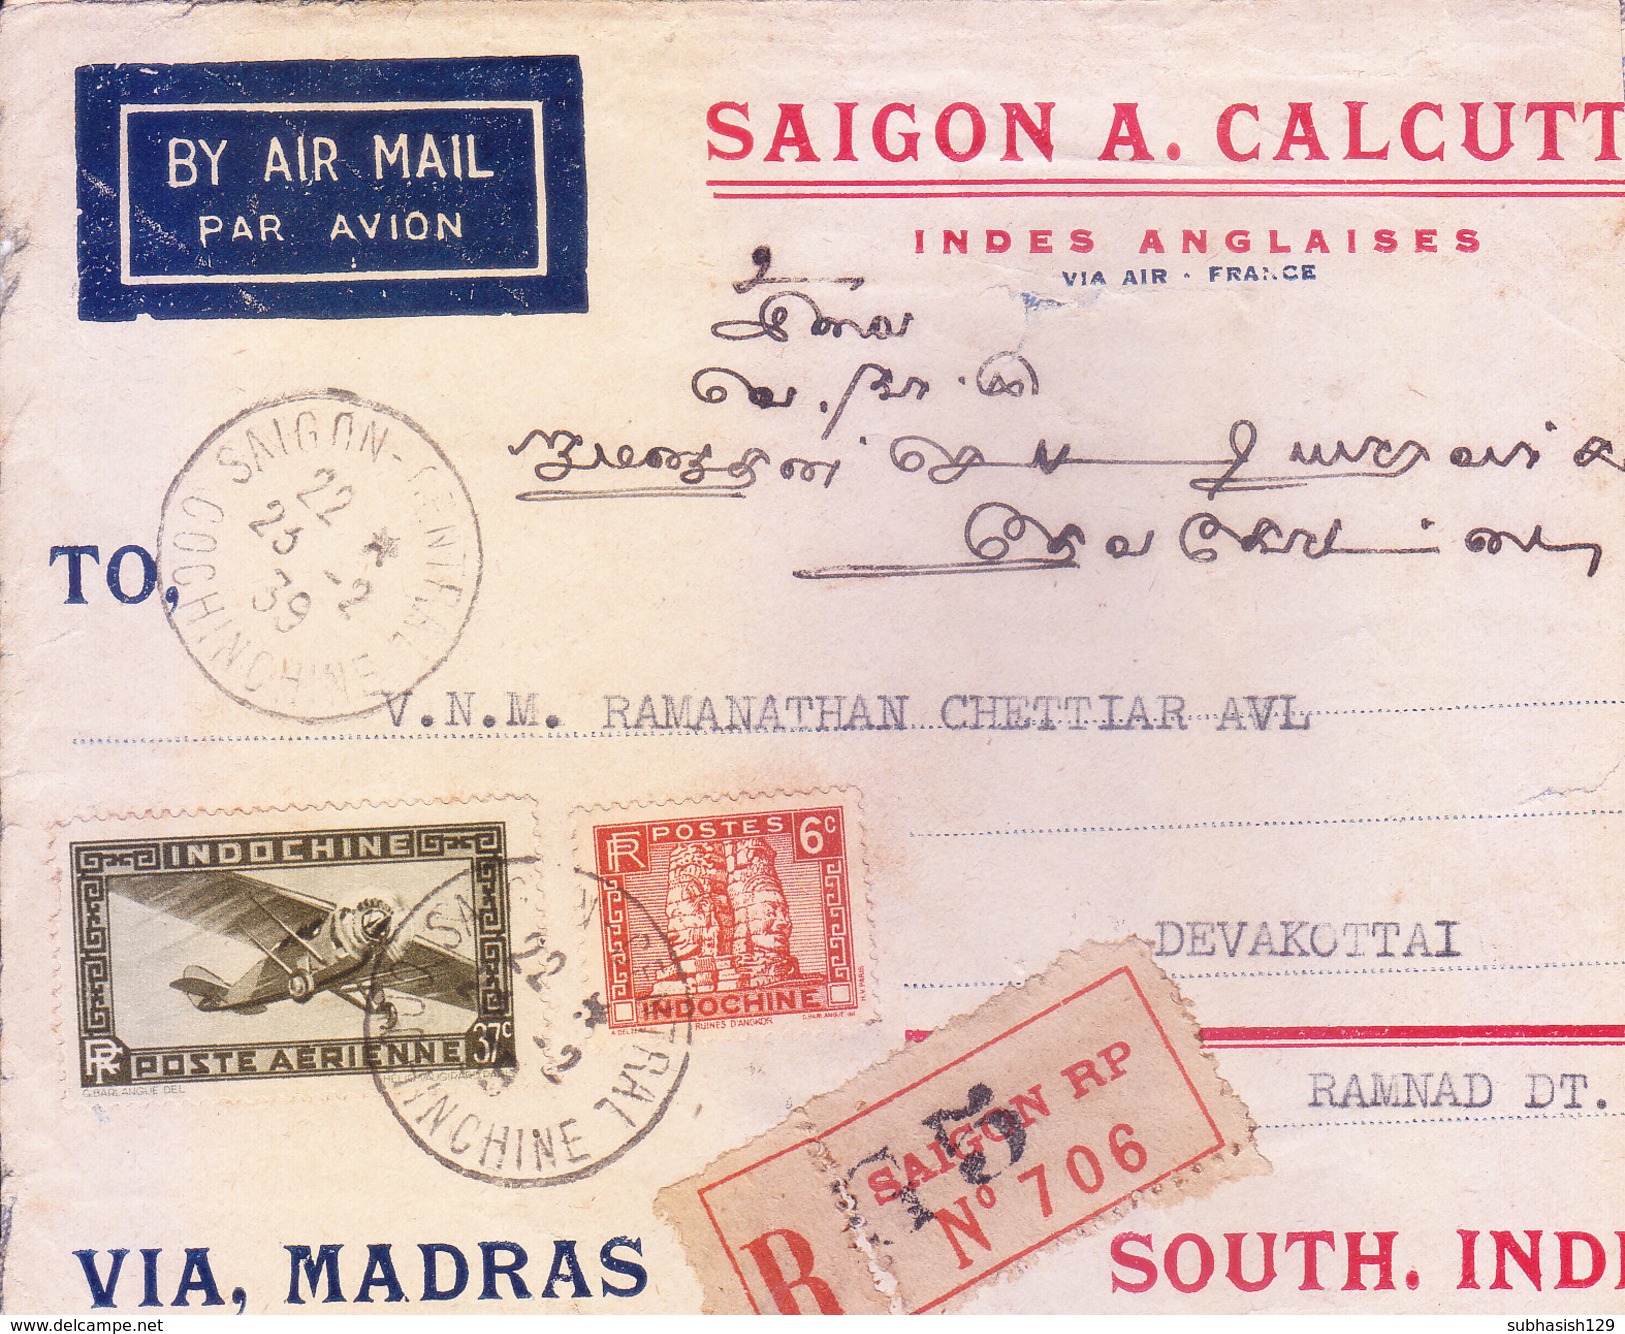 INDOCHINE 1938 AIRMAIL REGD. COVER, SAIGON TO SOUTH INDIA VIA MADRAS, UPTO TO CALCUTTA VIA AIR FRANCE - TORN CONDITION - Poste Aérienne